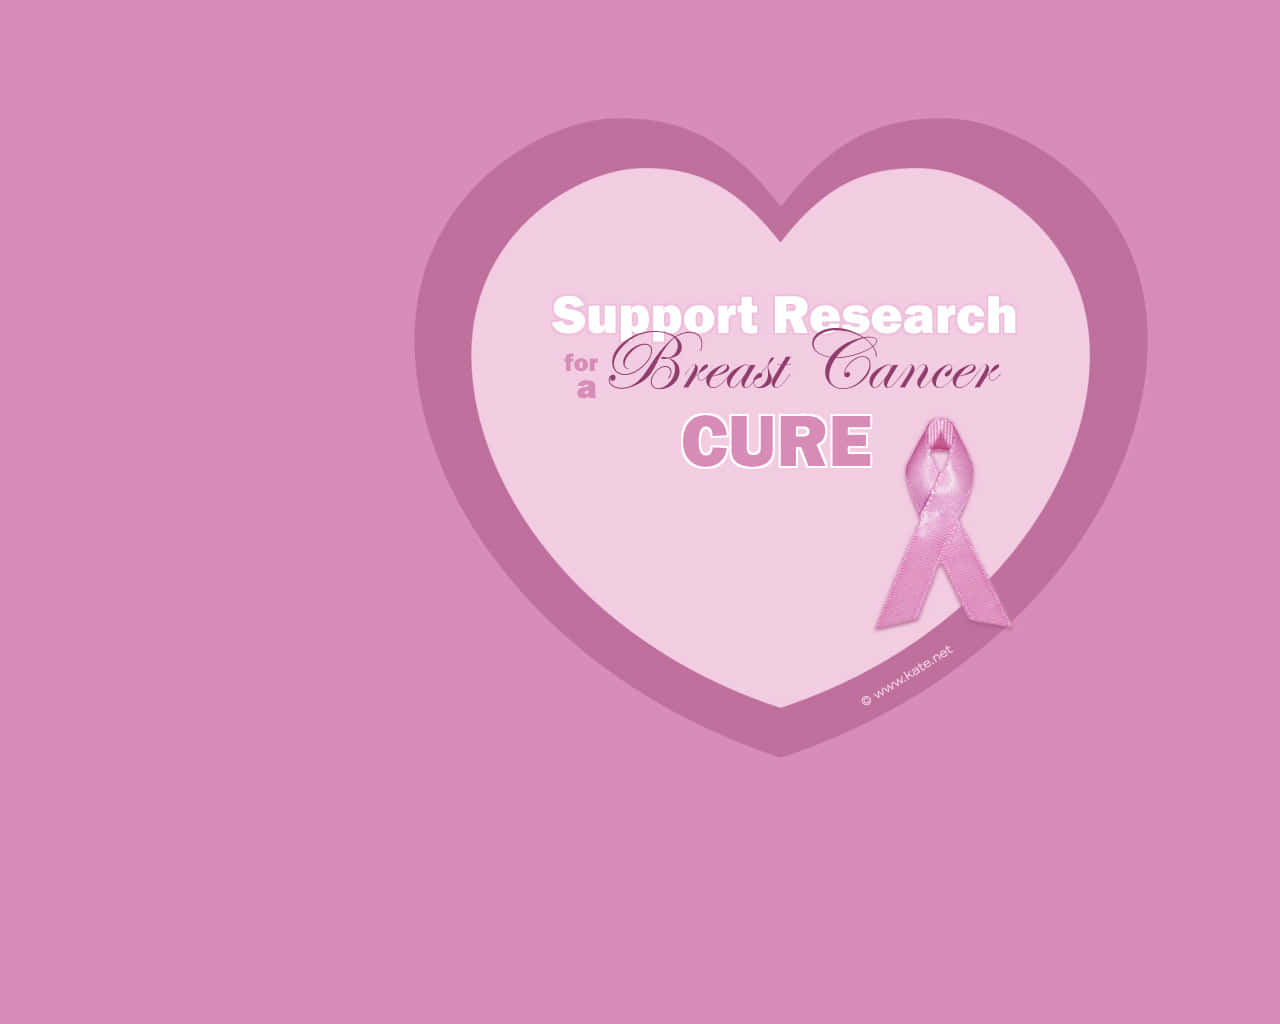 Pink Ribbon Symbolizing Breast Cancer Awareness Wallpaper